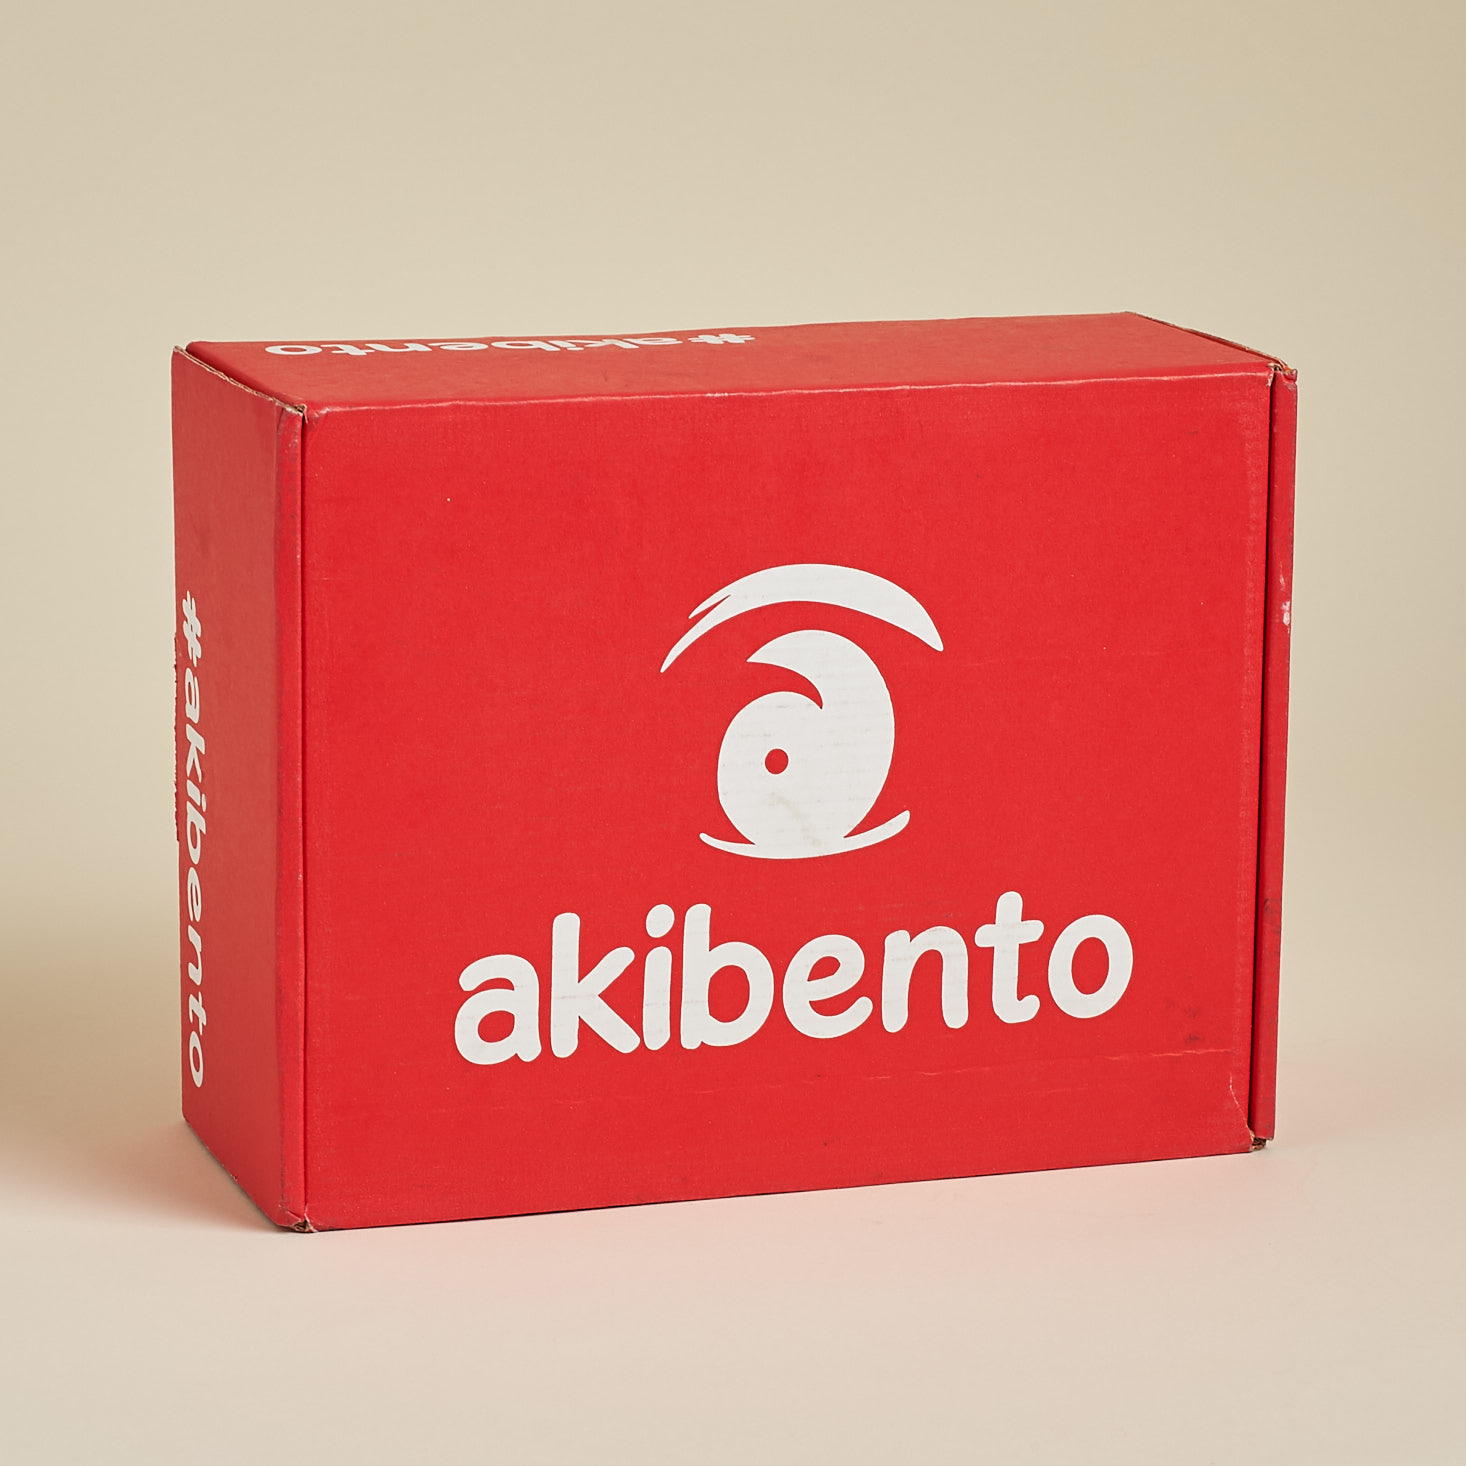 Akibento Subscription Box “Beast” Review + Coupon – January 2018